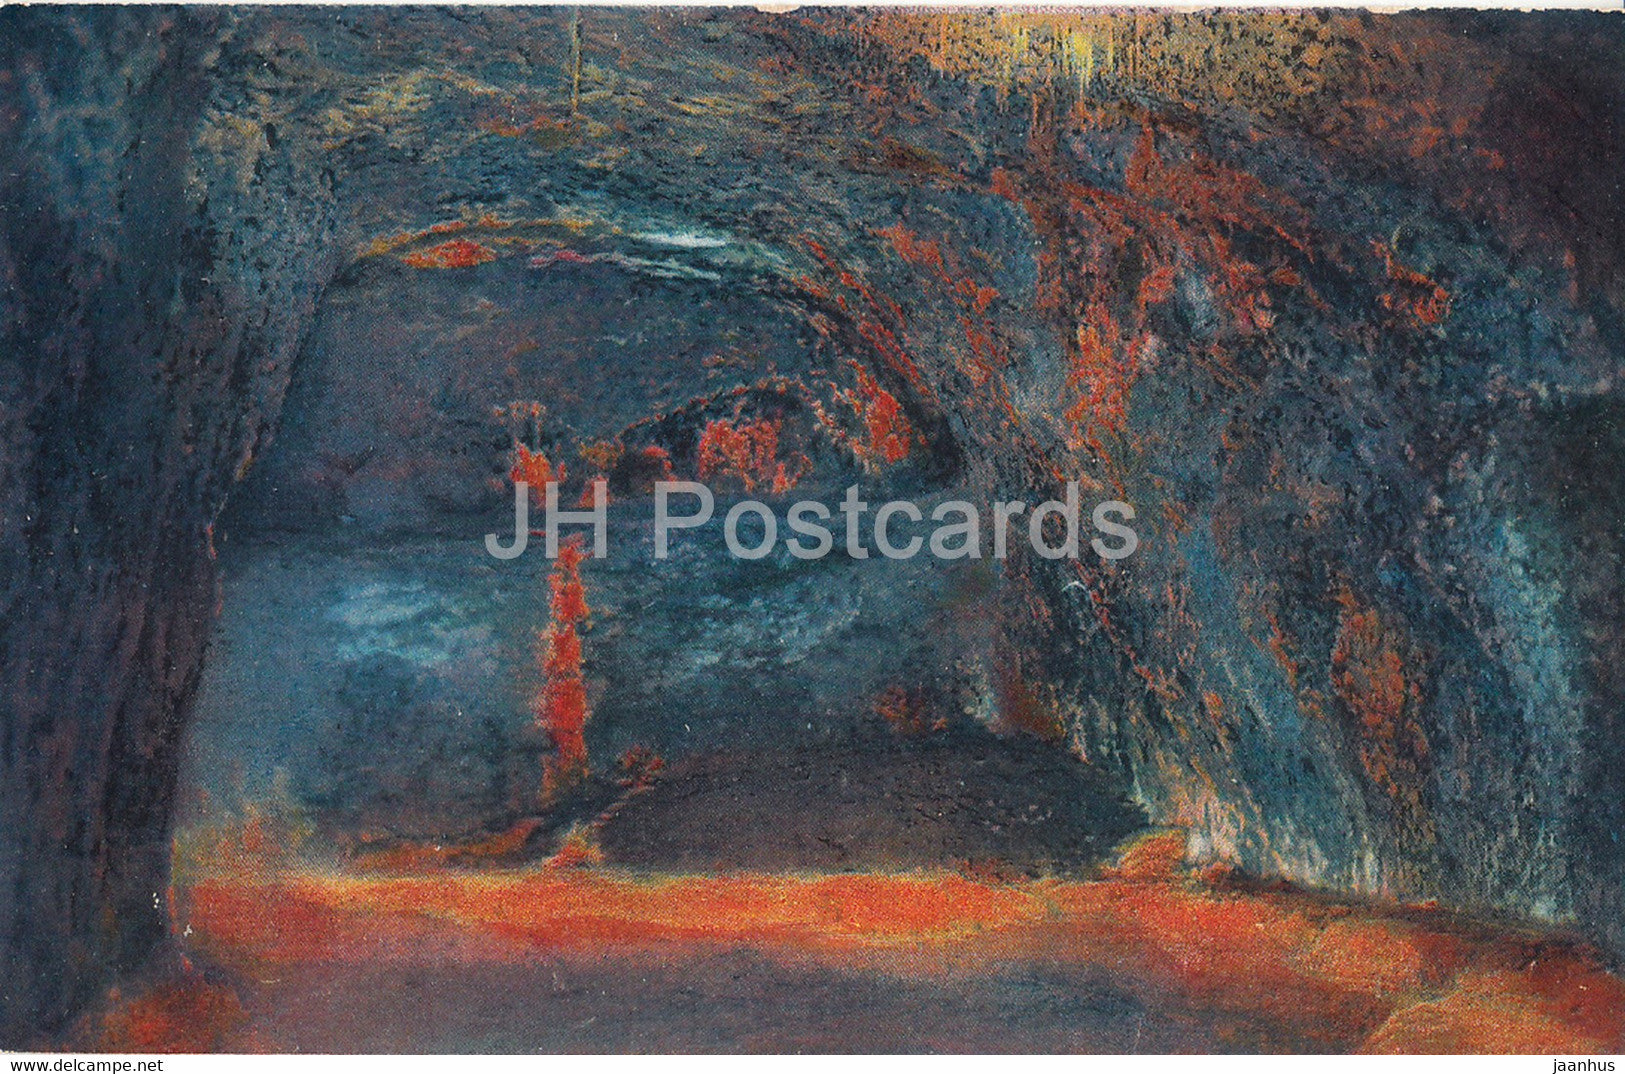 Feengrotten bei Saalfeld in Thur - Rechte Quellgrotte - cave - old postcard - Germany - unused - JH Postcards